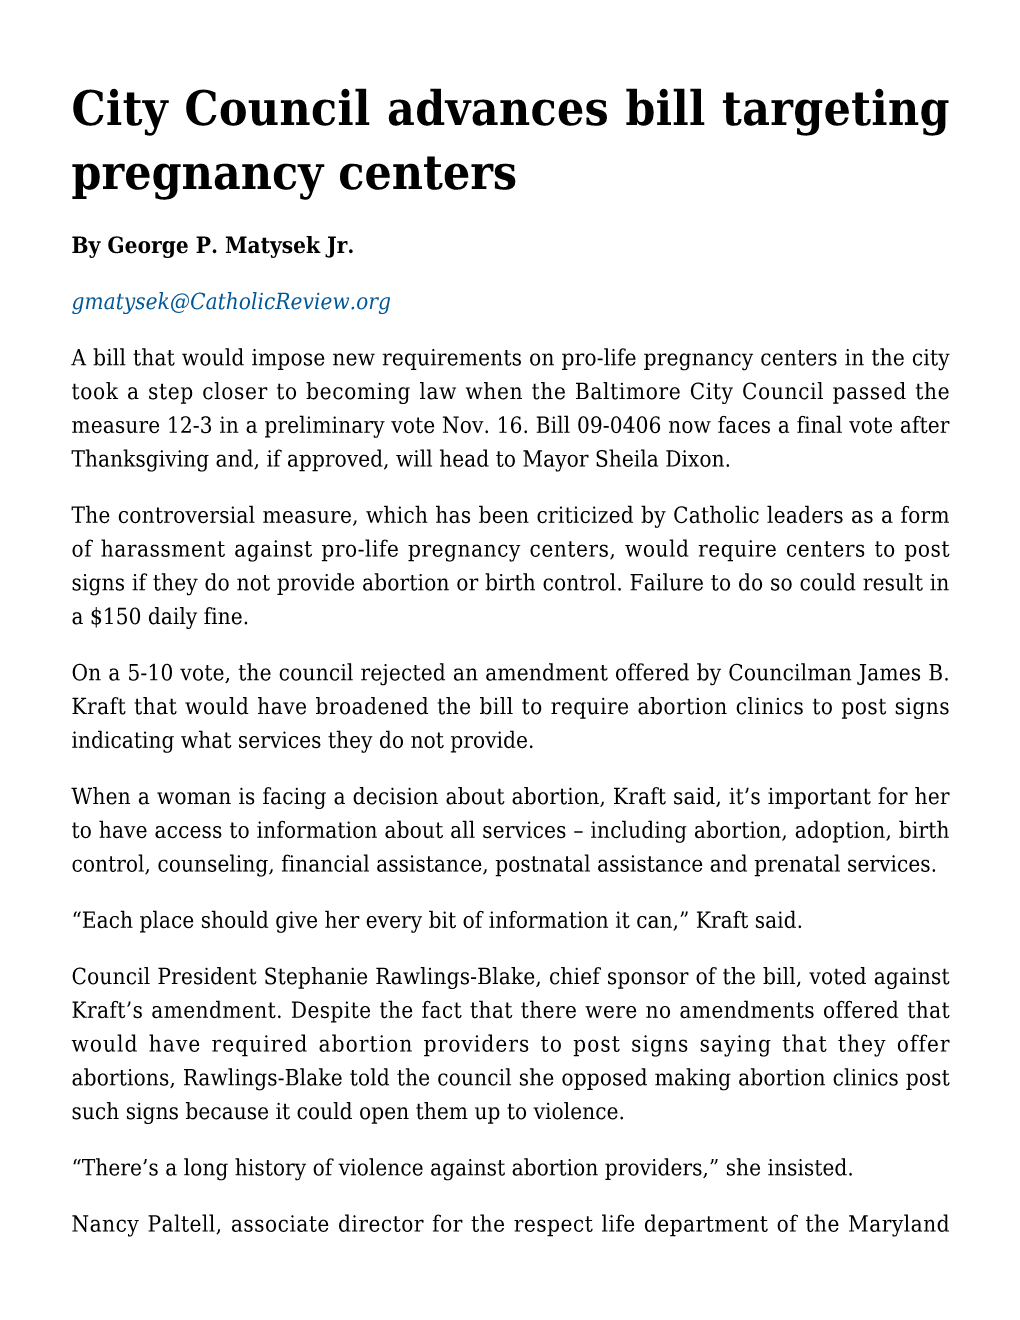 City Council Advances Bill Targeting Pregnancy Centers